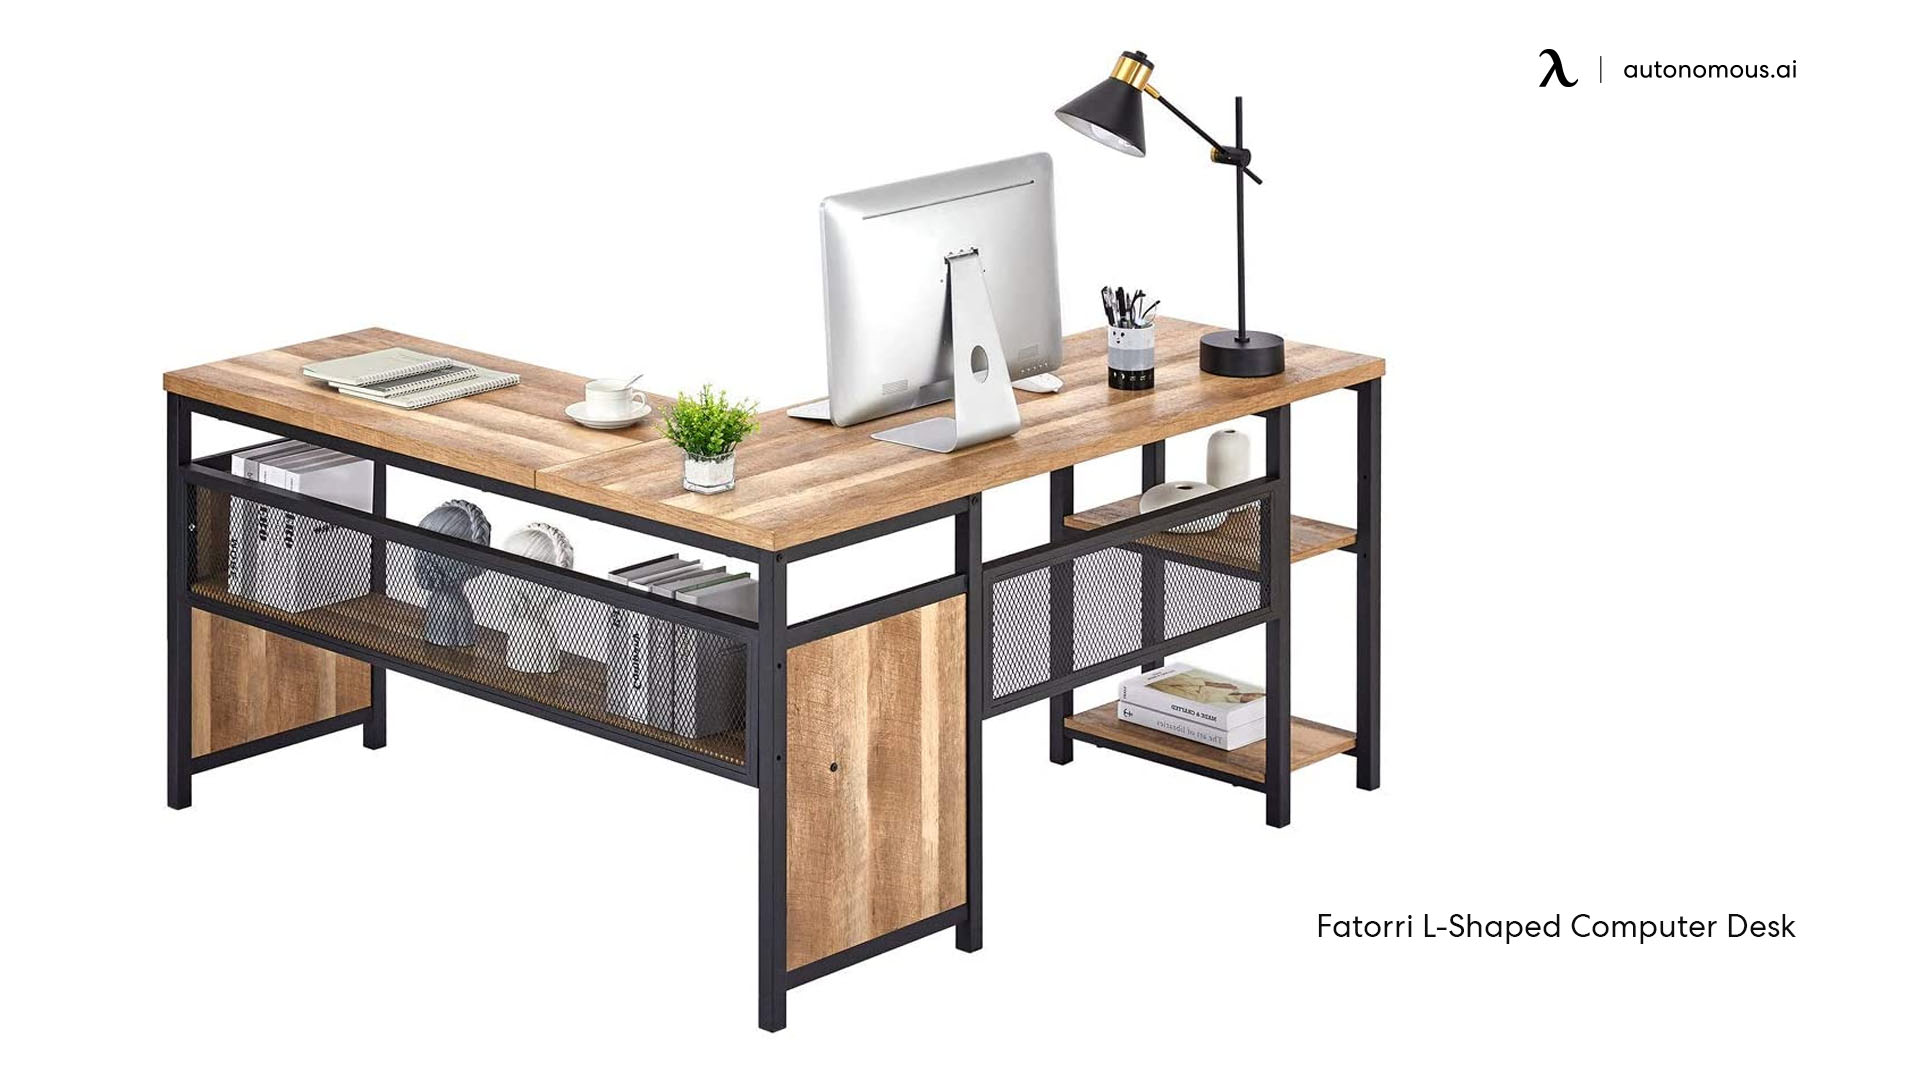 Fatorri l-shaped desks